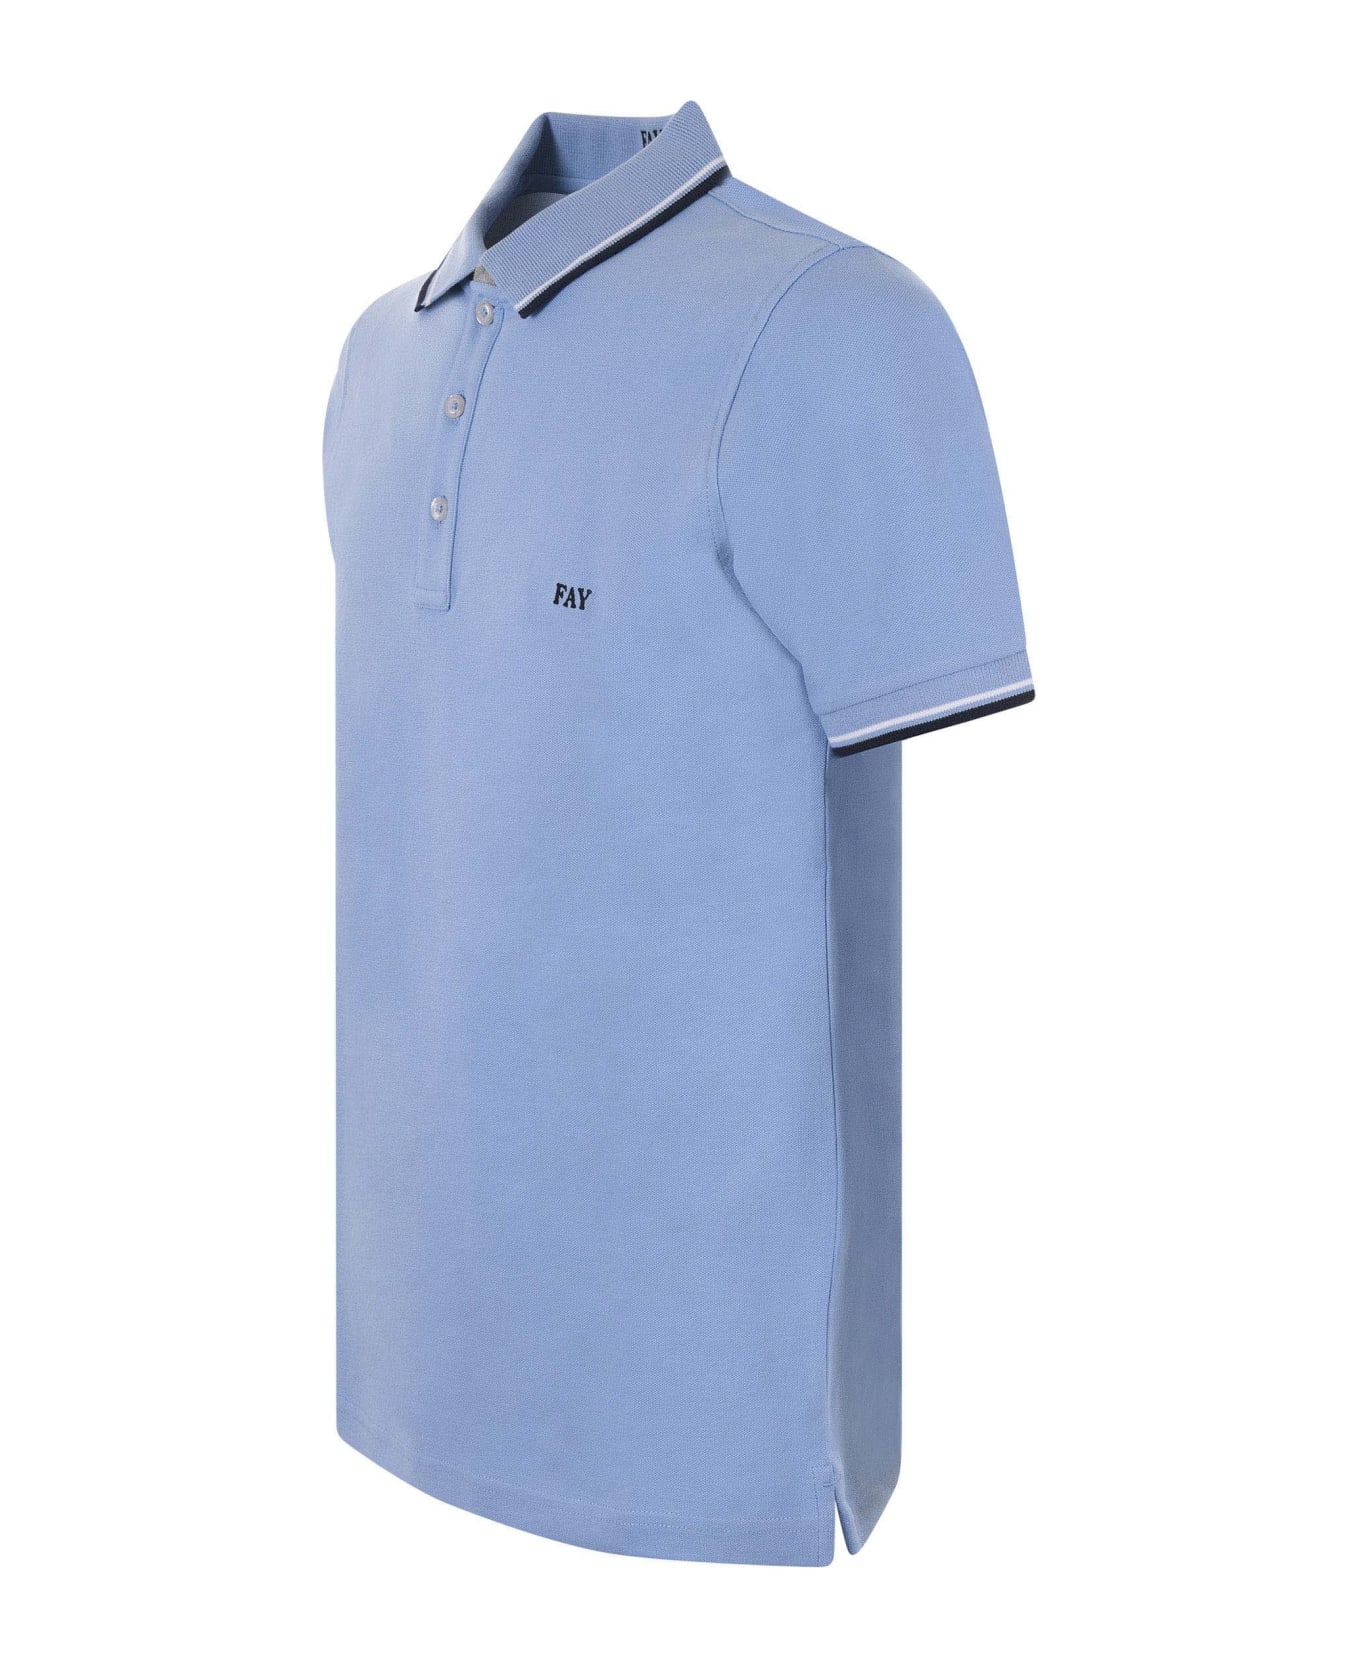 Fay Classic Polo Shirt - LIGHT BLUE